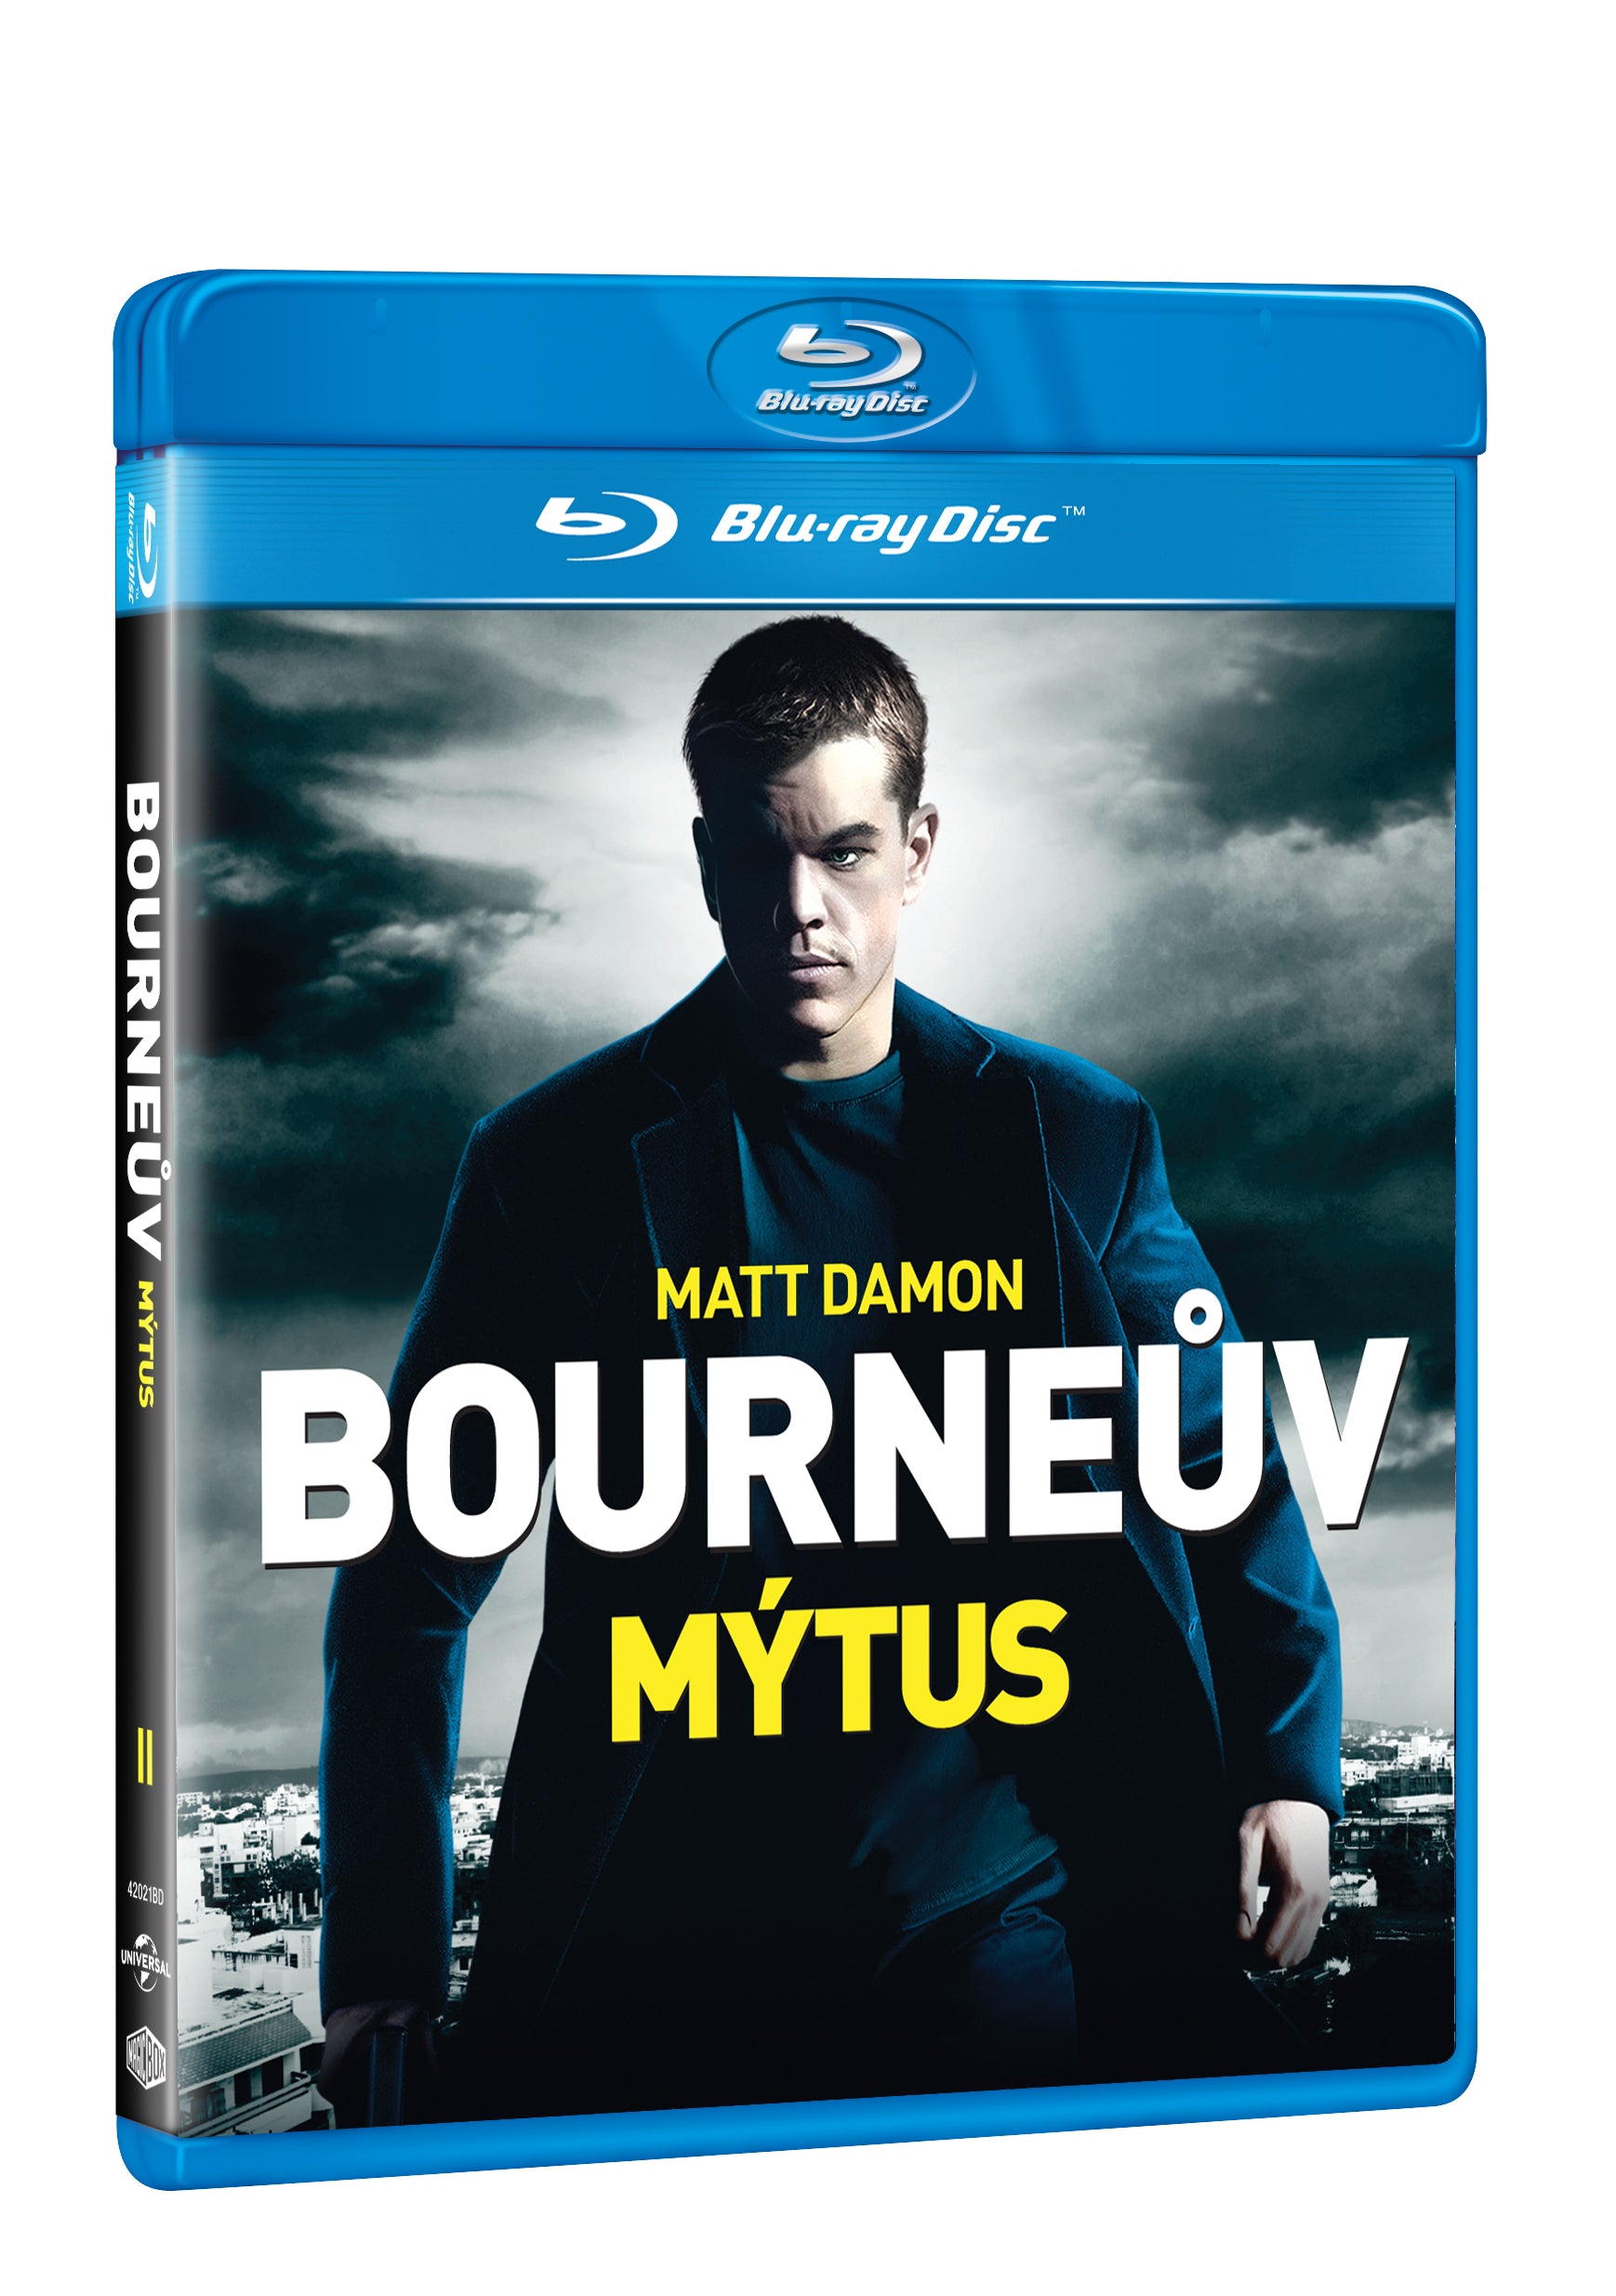 Bournuv mytus BD / The Bourne Supremacy - Czech version